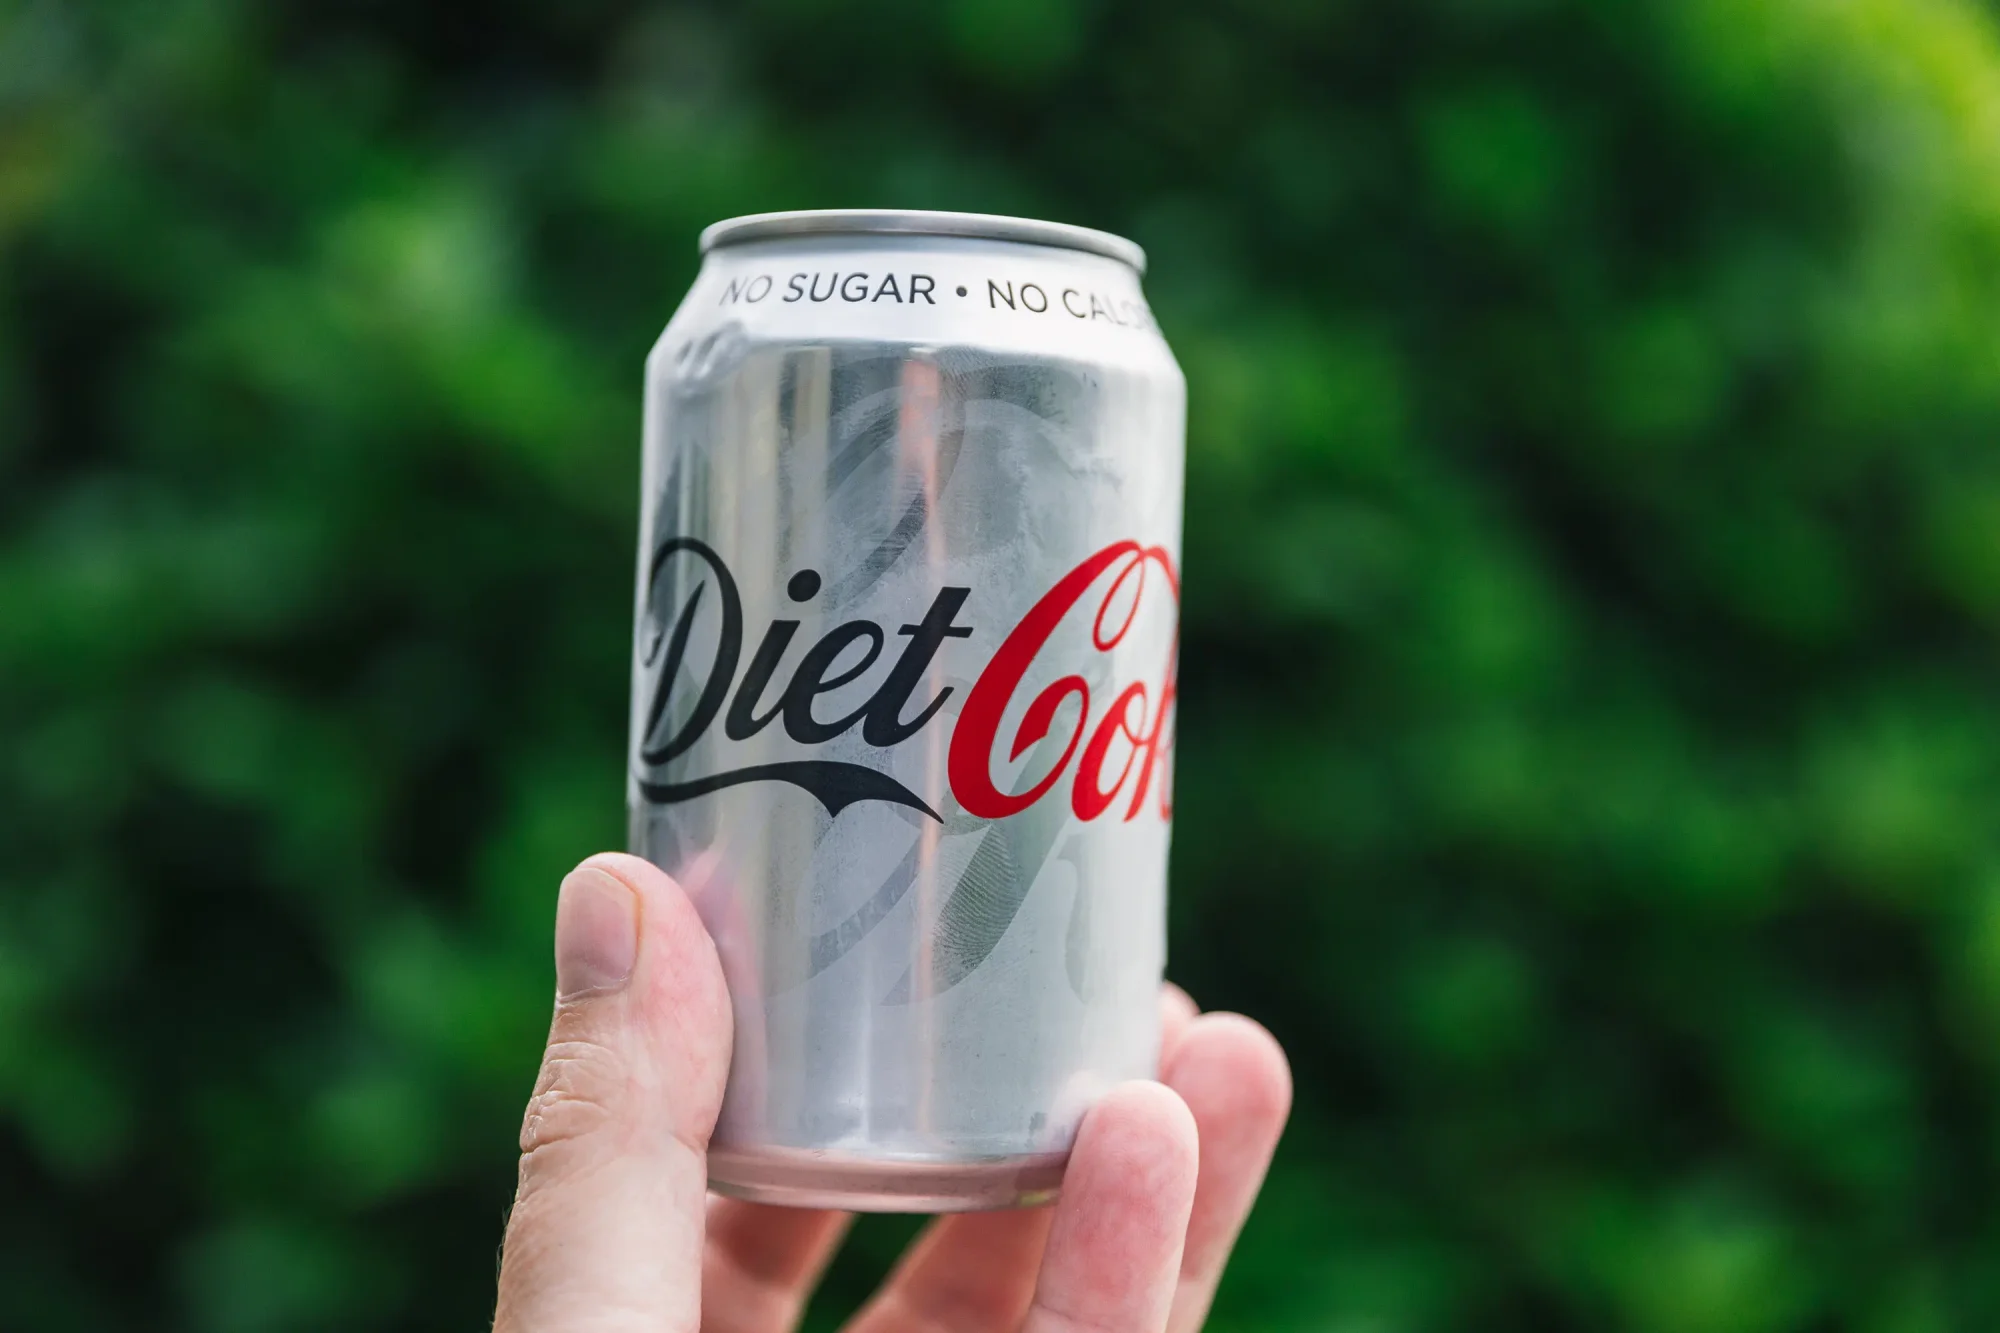 Can of Diet Coke held against green garden background.